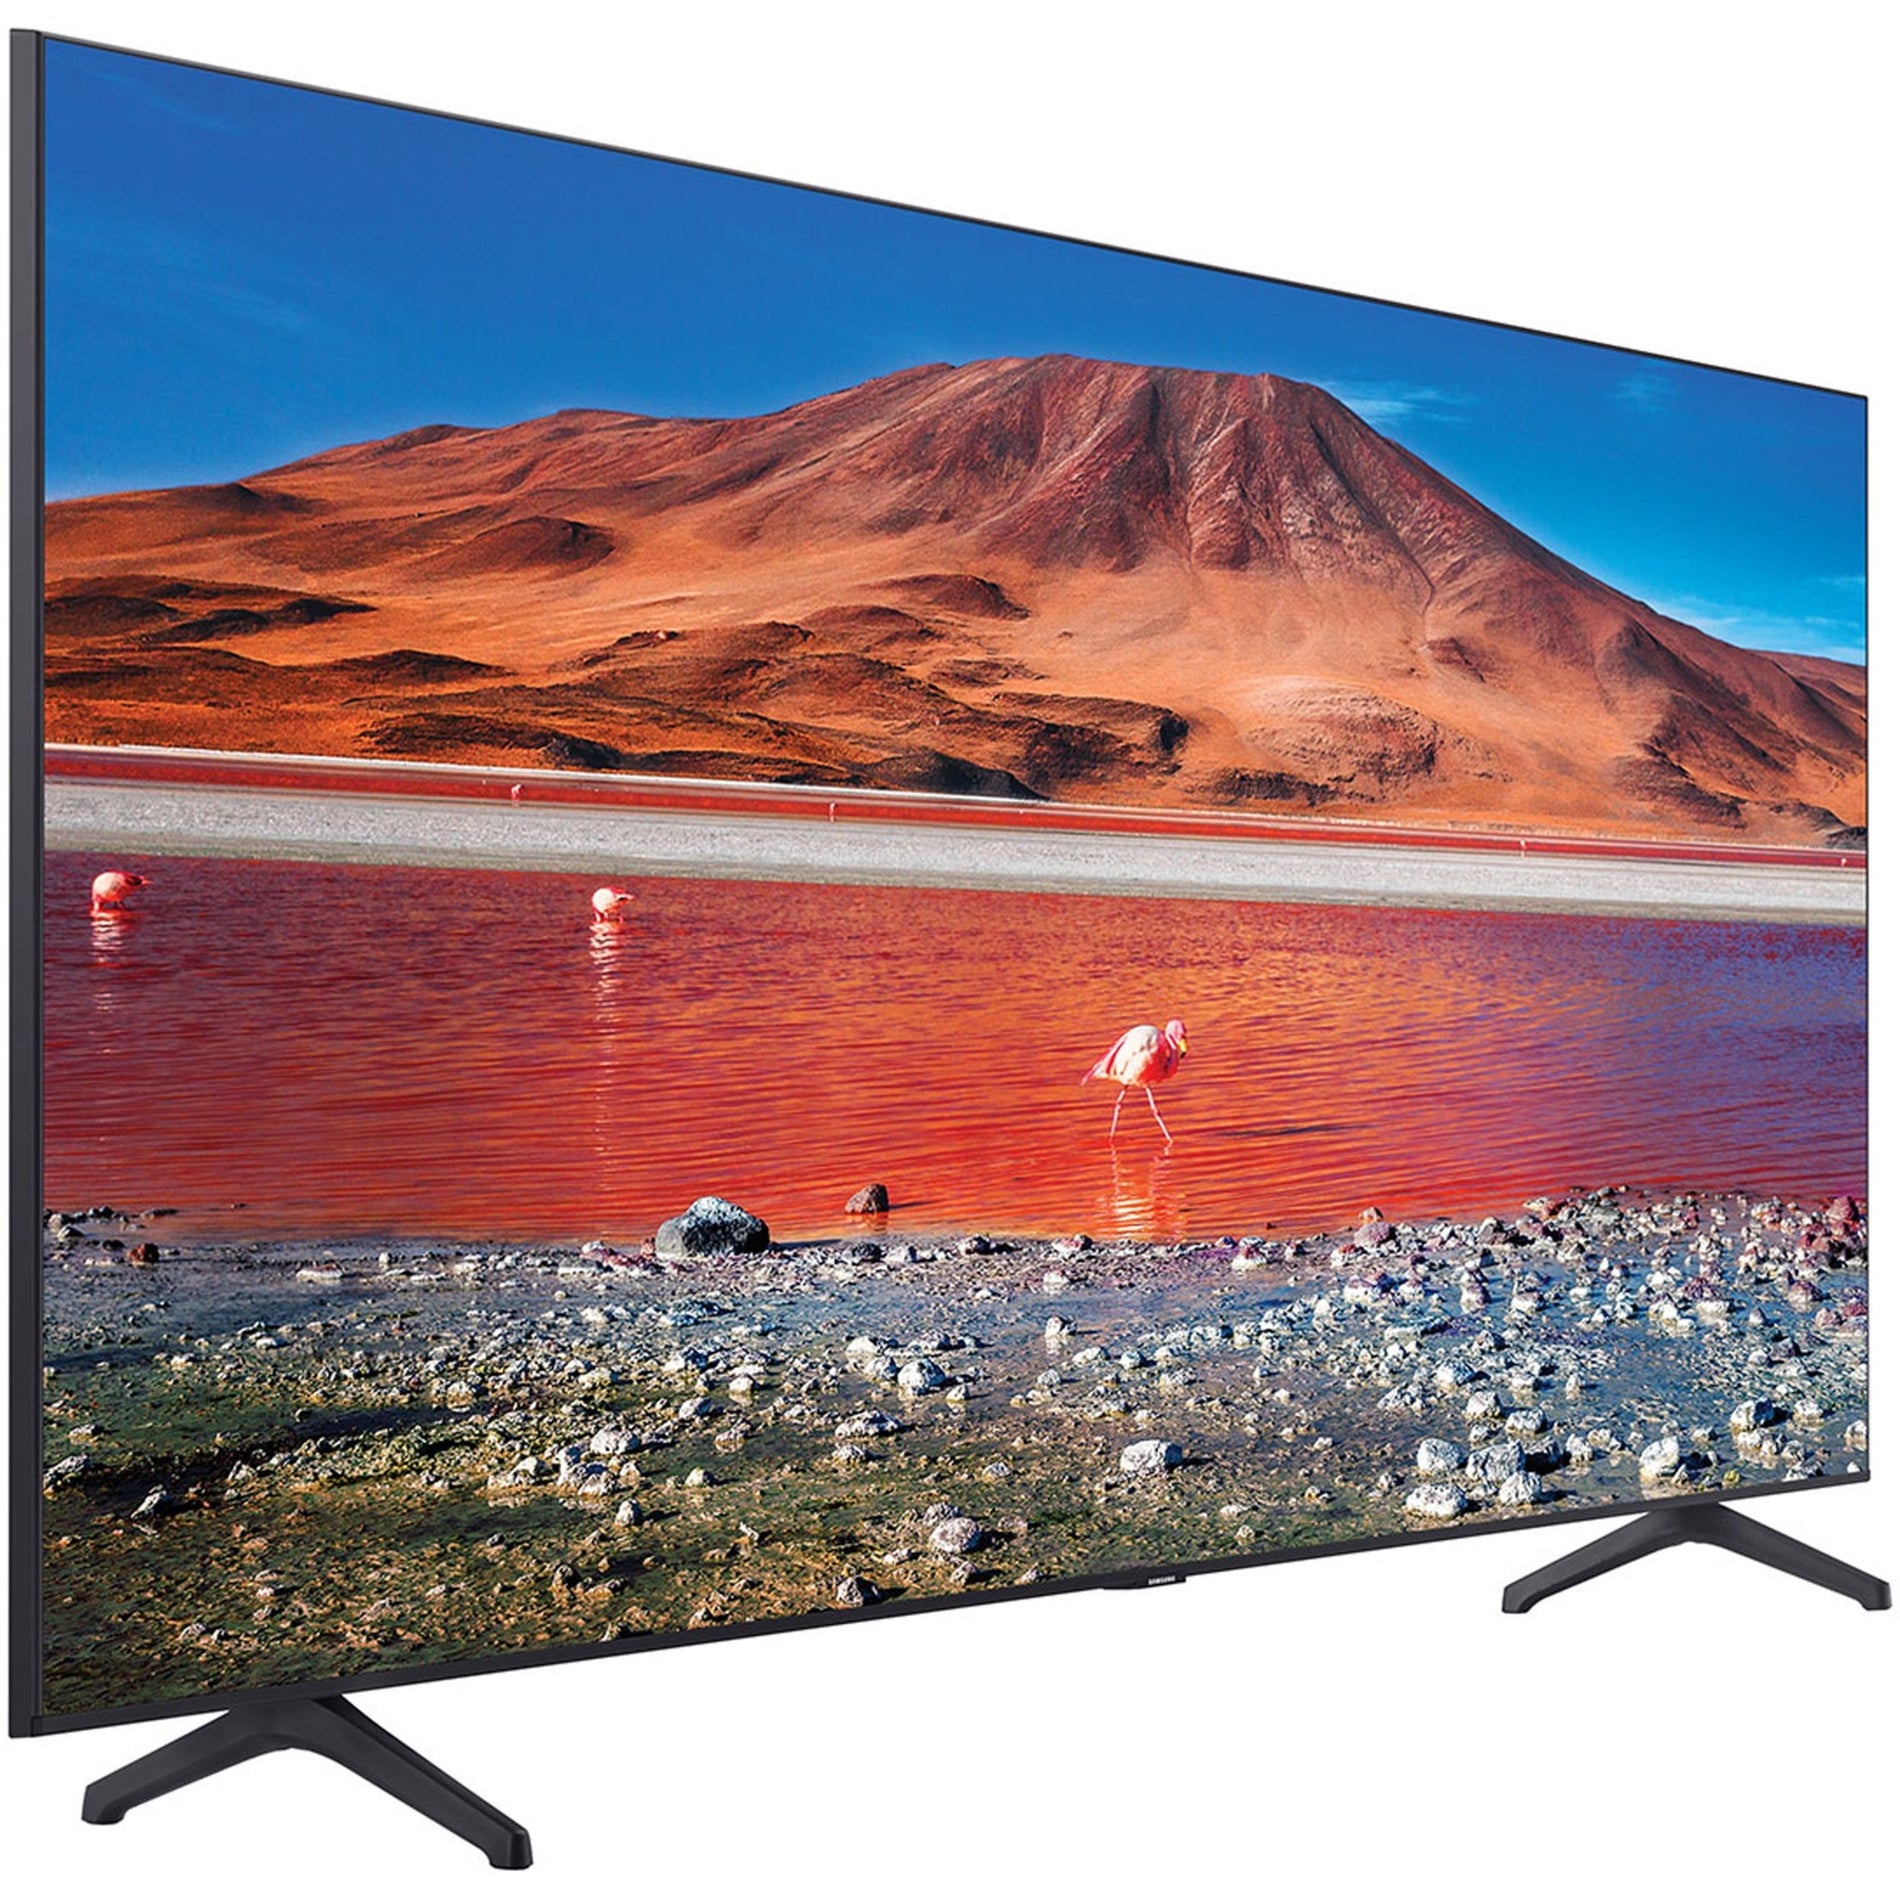 Samsung UN65TU7000FXZA 65" Class TU7000 Crystal UHD 4K Smart TV (2020), 120Hz, 2 HDMI Ports, PurColor